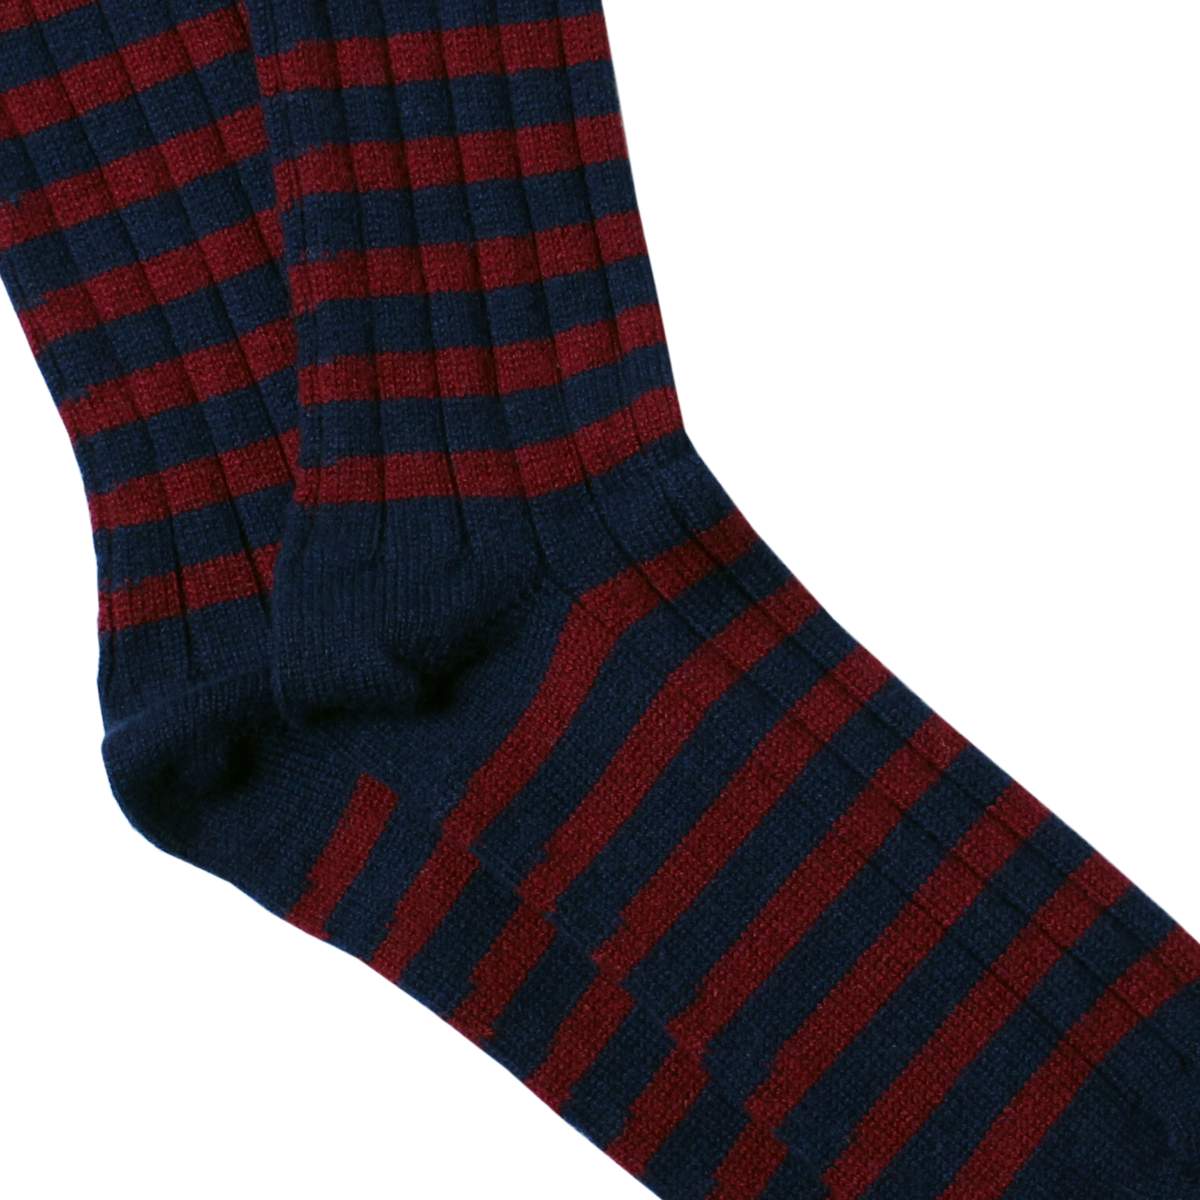 Navy & Wine Stripe Ribbed Cashmere Blend Socks  Robert Old   